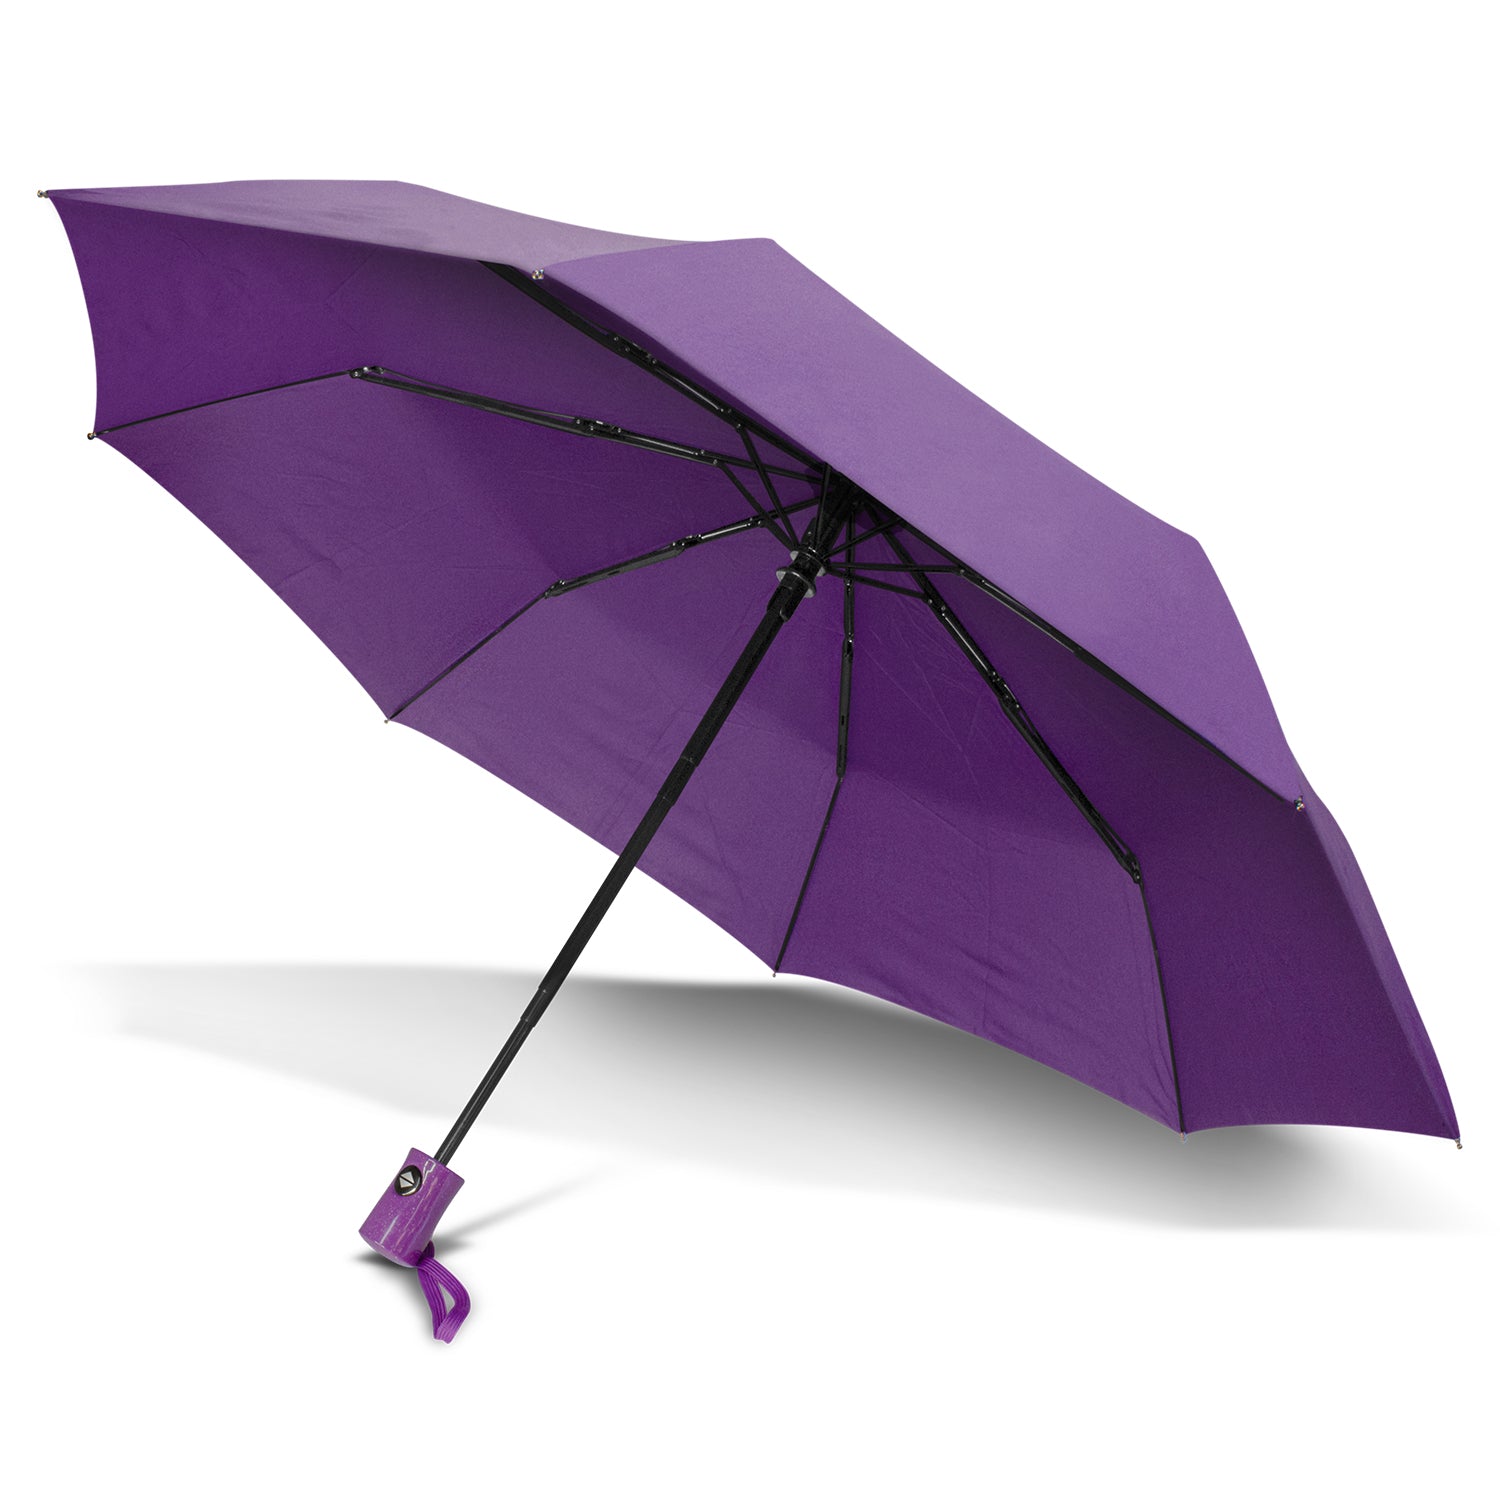 STORM PROOF ULTIMATE COMPACT RAINDROP®️ Premium Collapsible Umbrella, Heavy Duty Steel Frame, Textured Raindrop Finish Handle -SMART Auto Open & Close